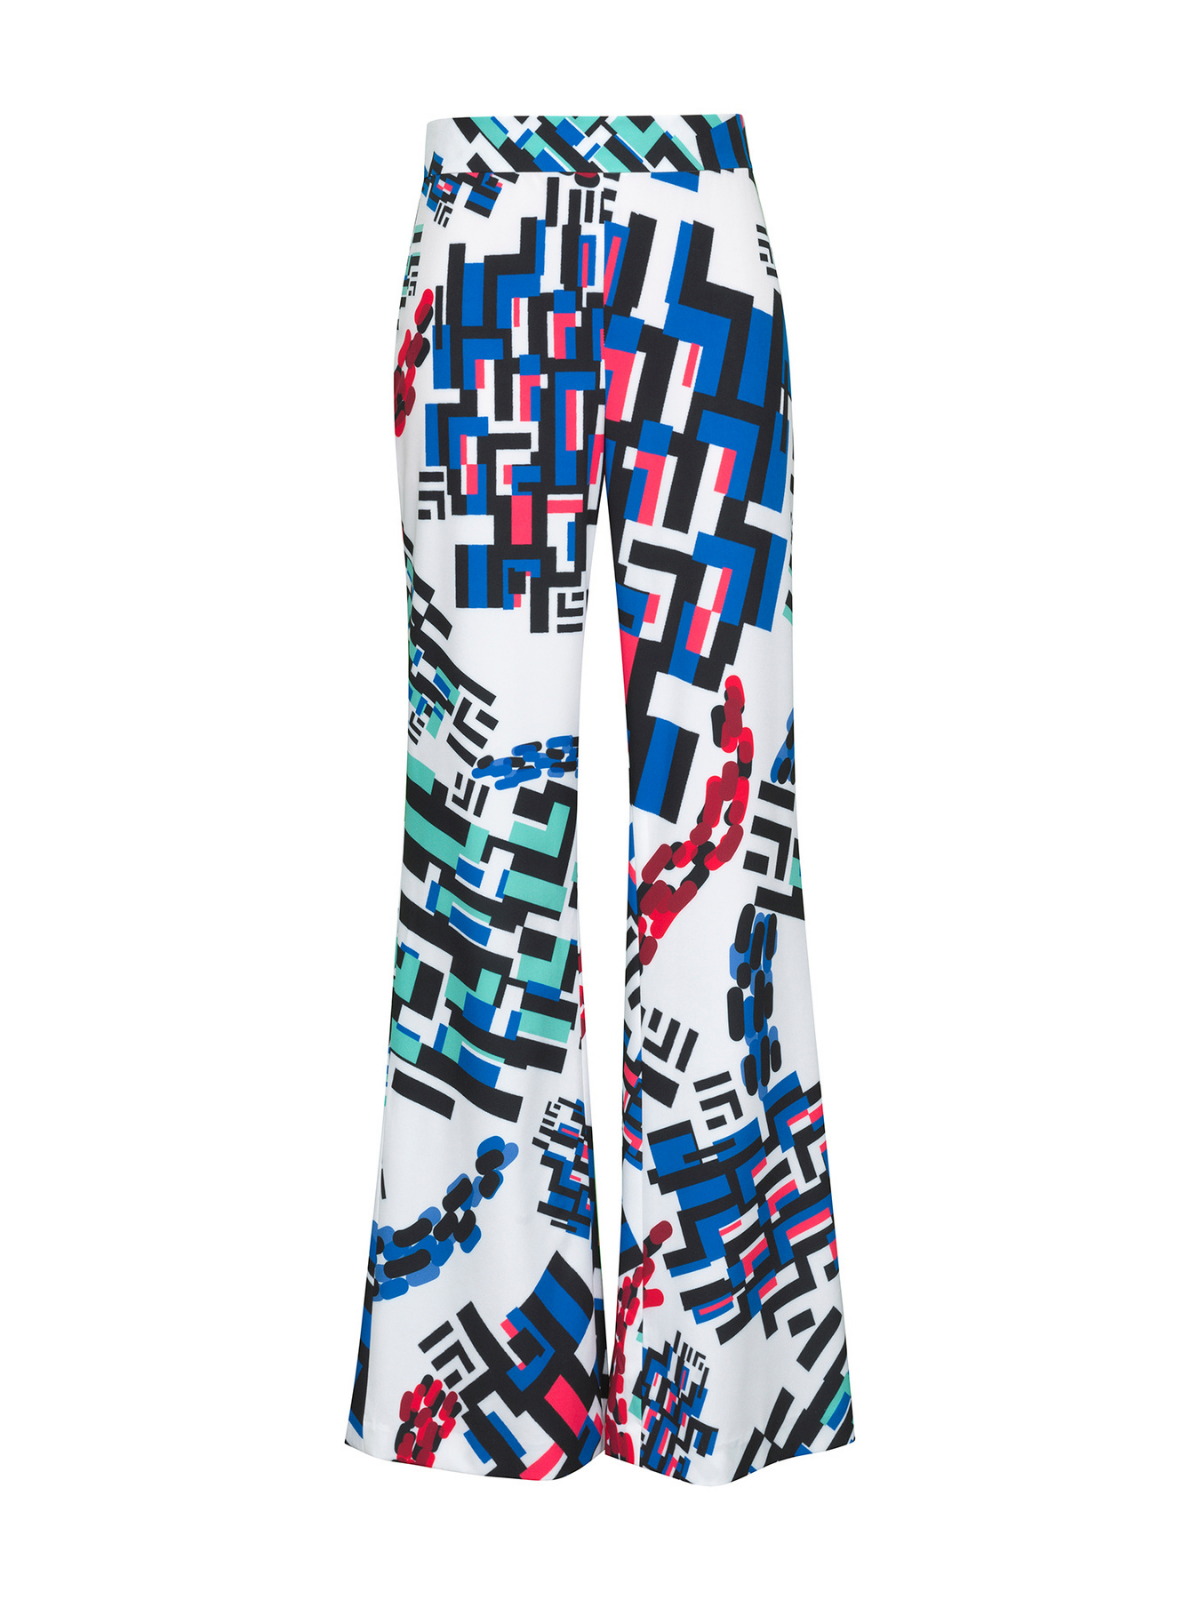 Men's Joggers Streetwear Color Block Patchwork Cargo Pants Corduroy Trousers  | eBay